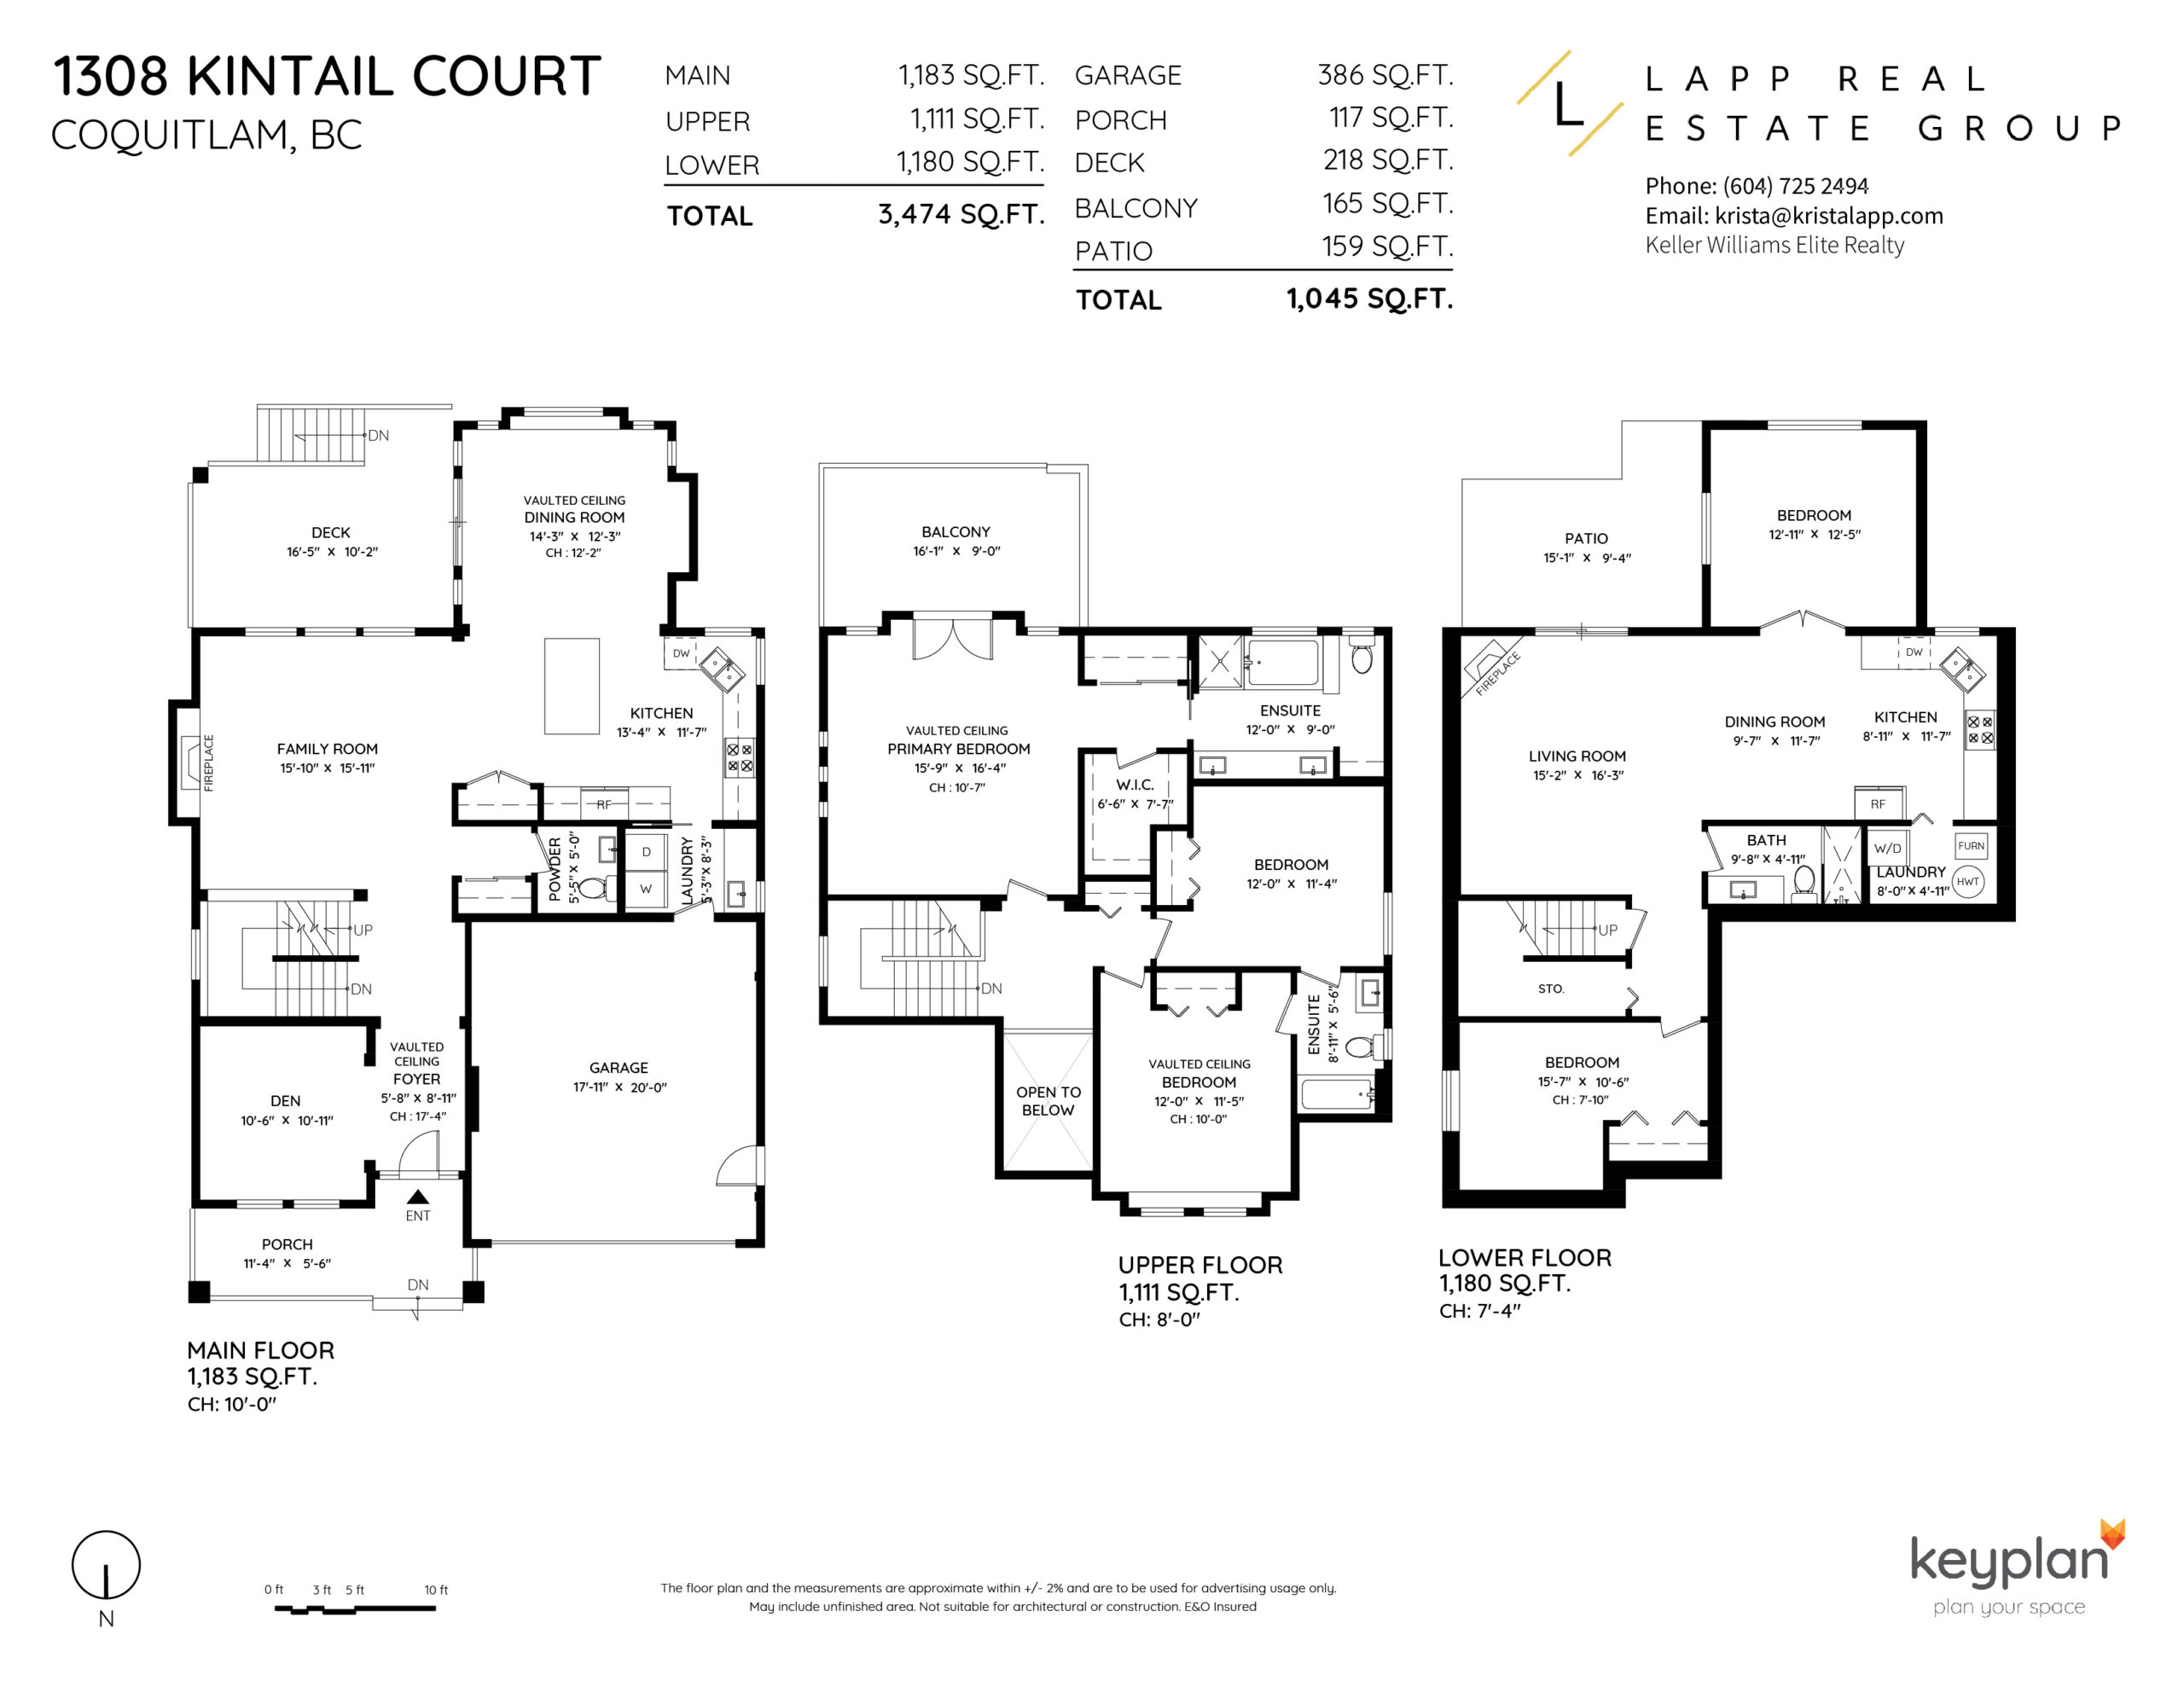 Krista Lapp 1308 Kintail Ct Burke Mountain Coquitlam Single Family Home Floor Plan